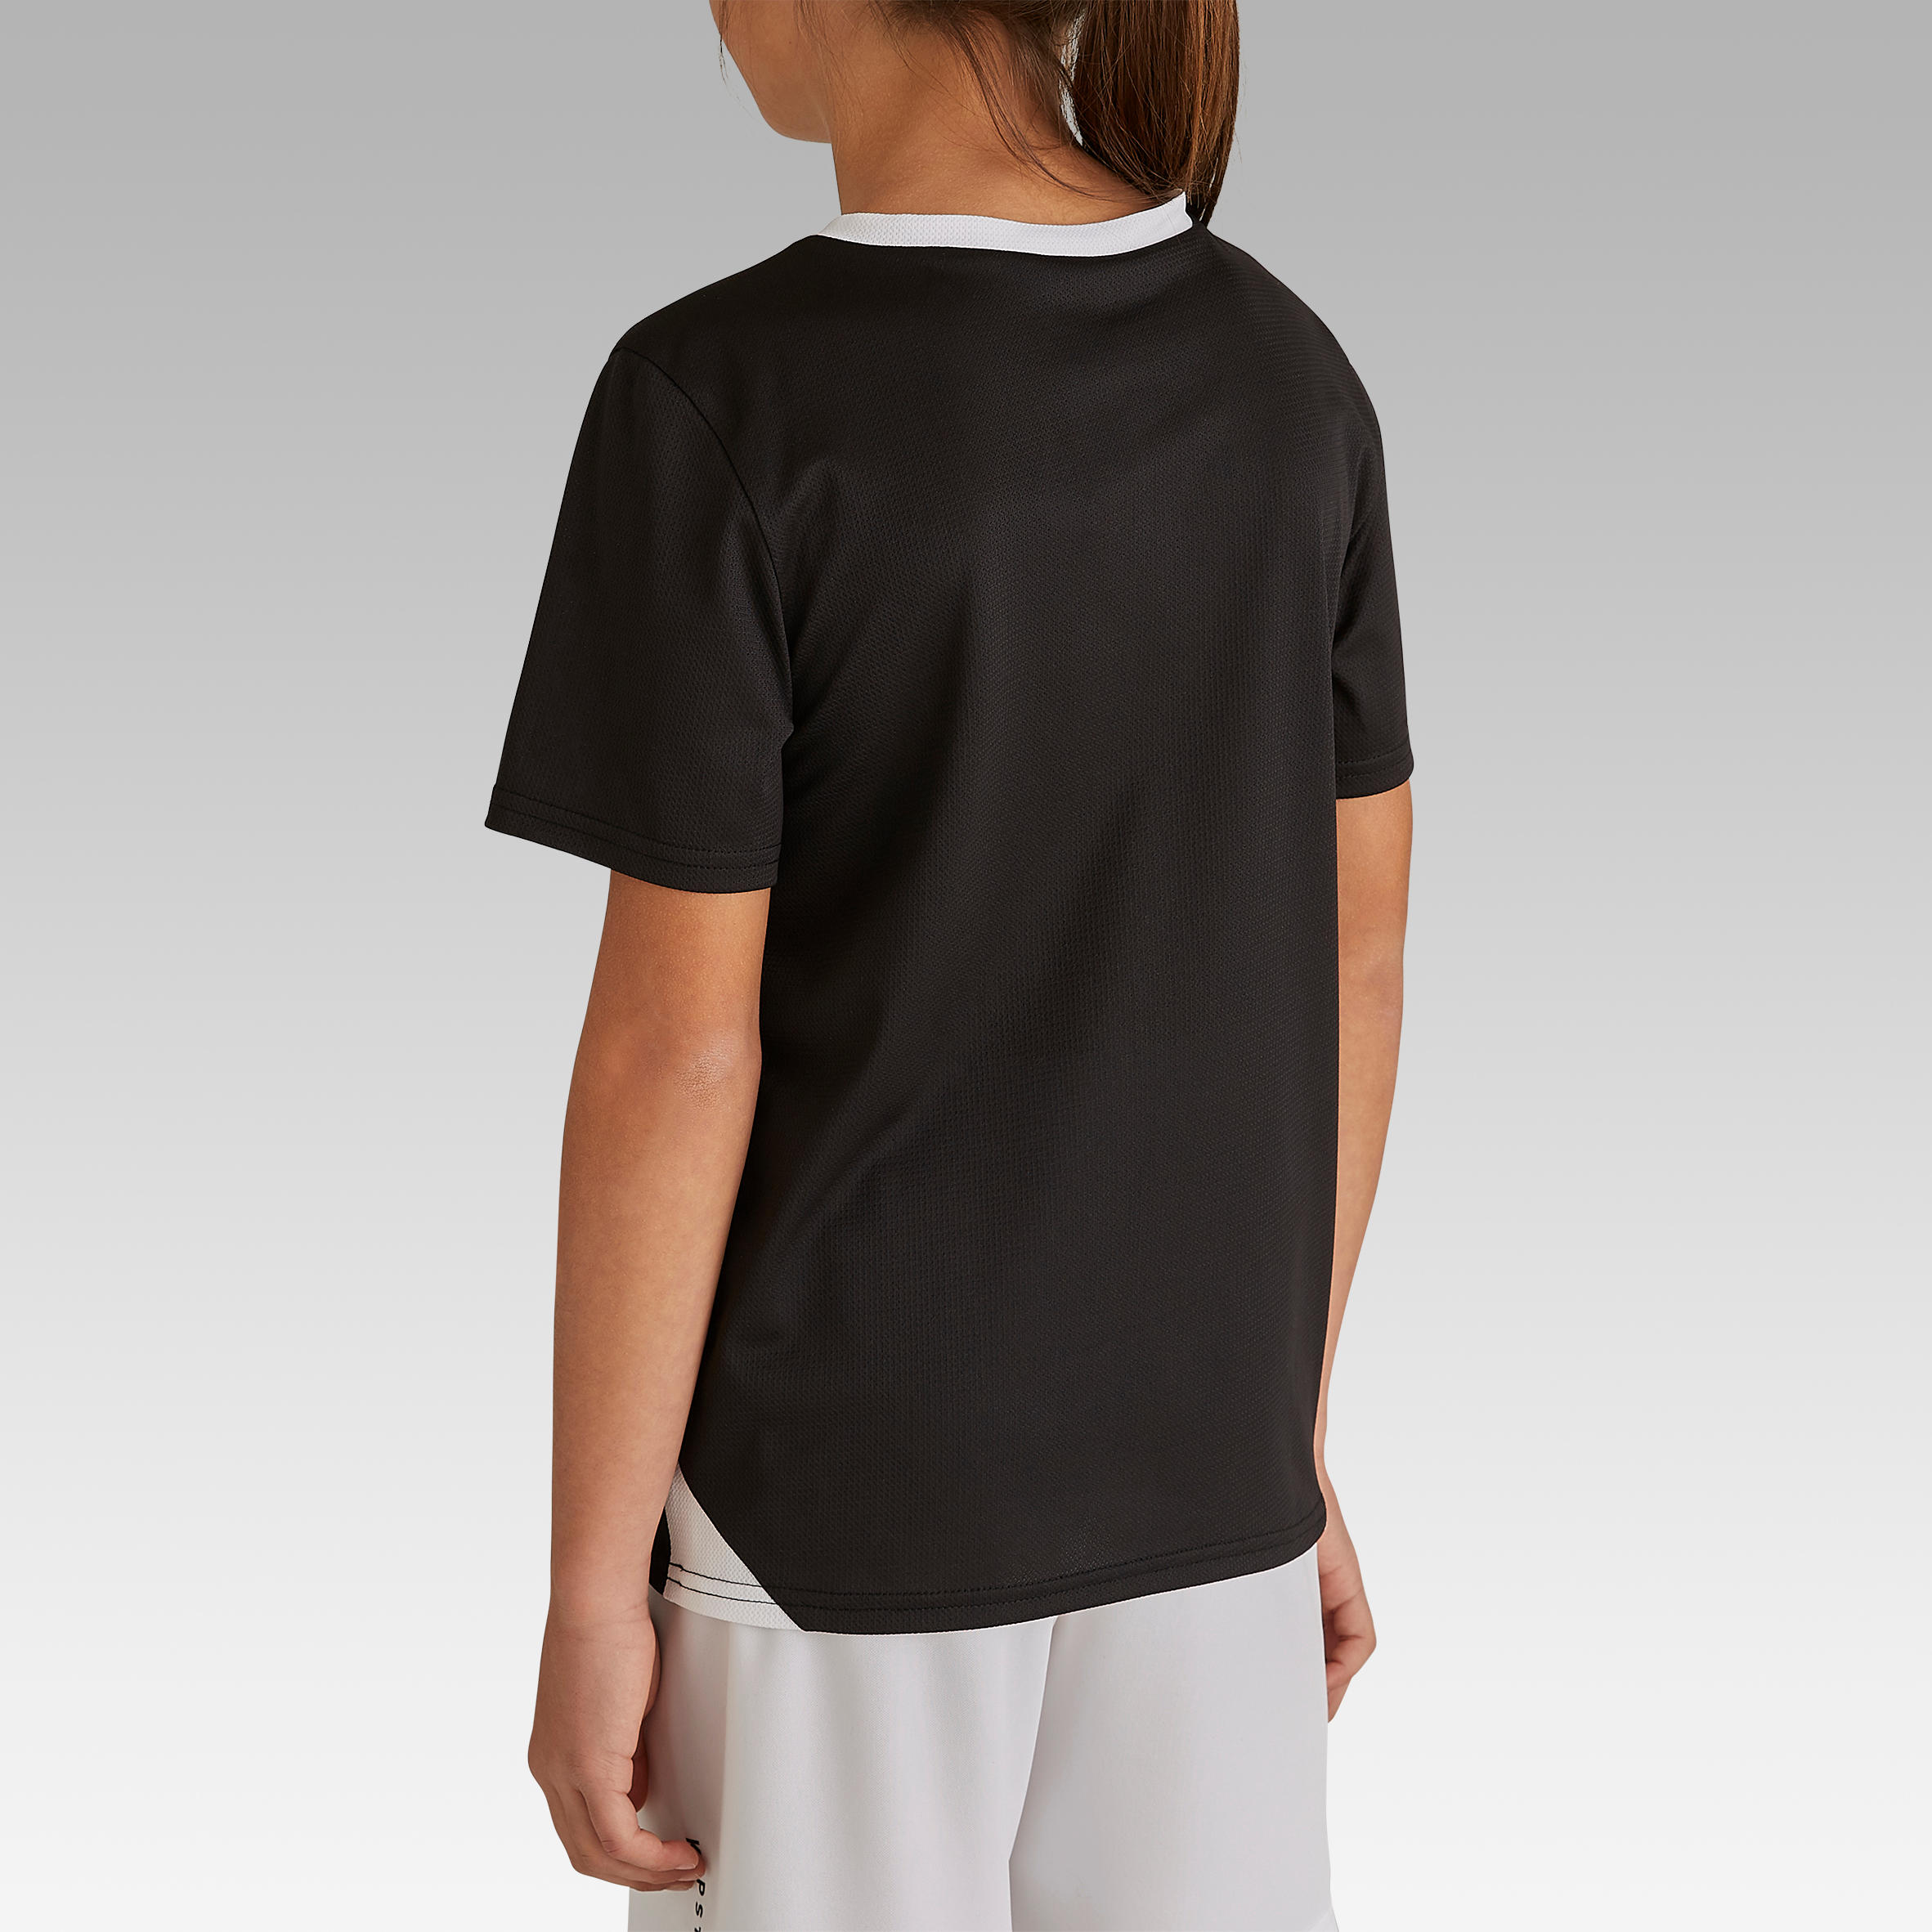 Kids' Football Shirt Essential - Black 5/8